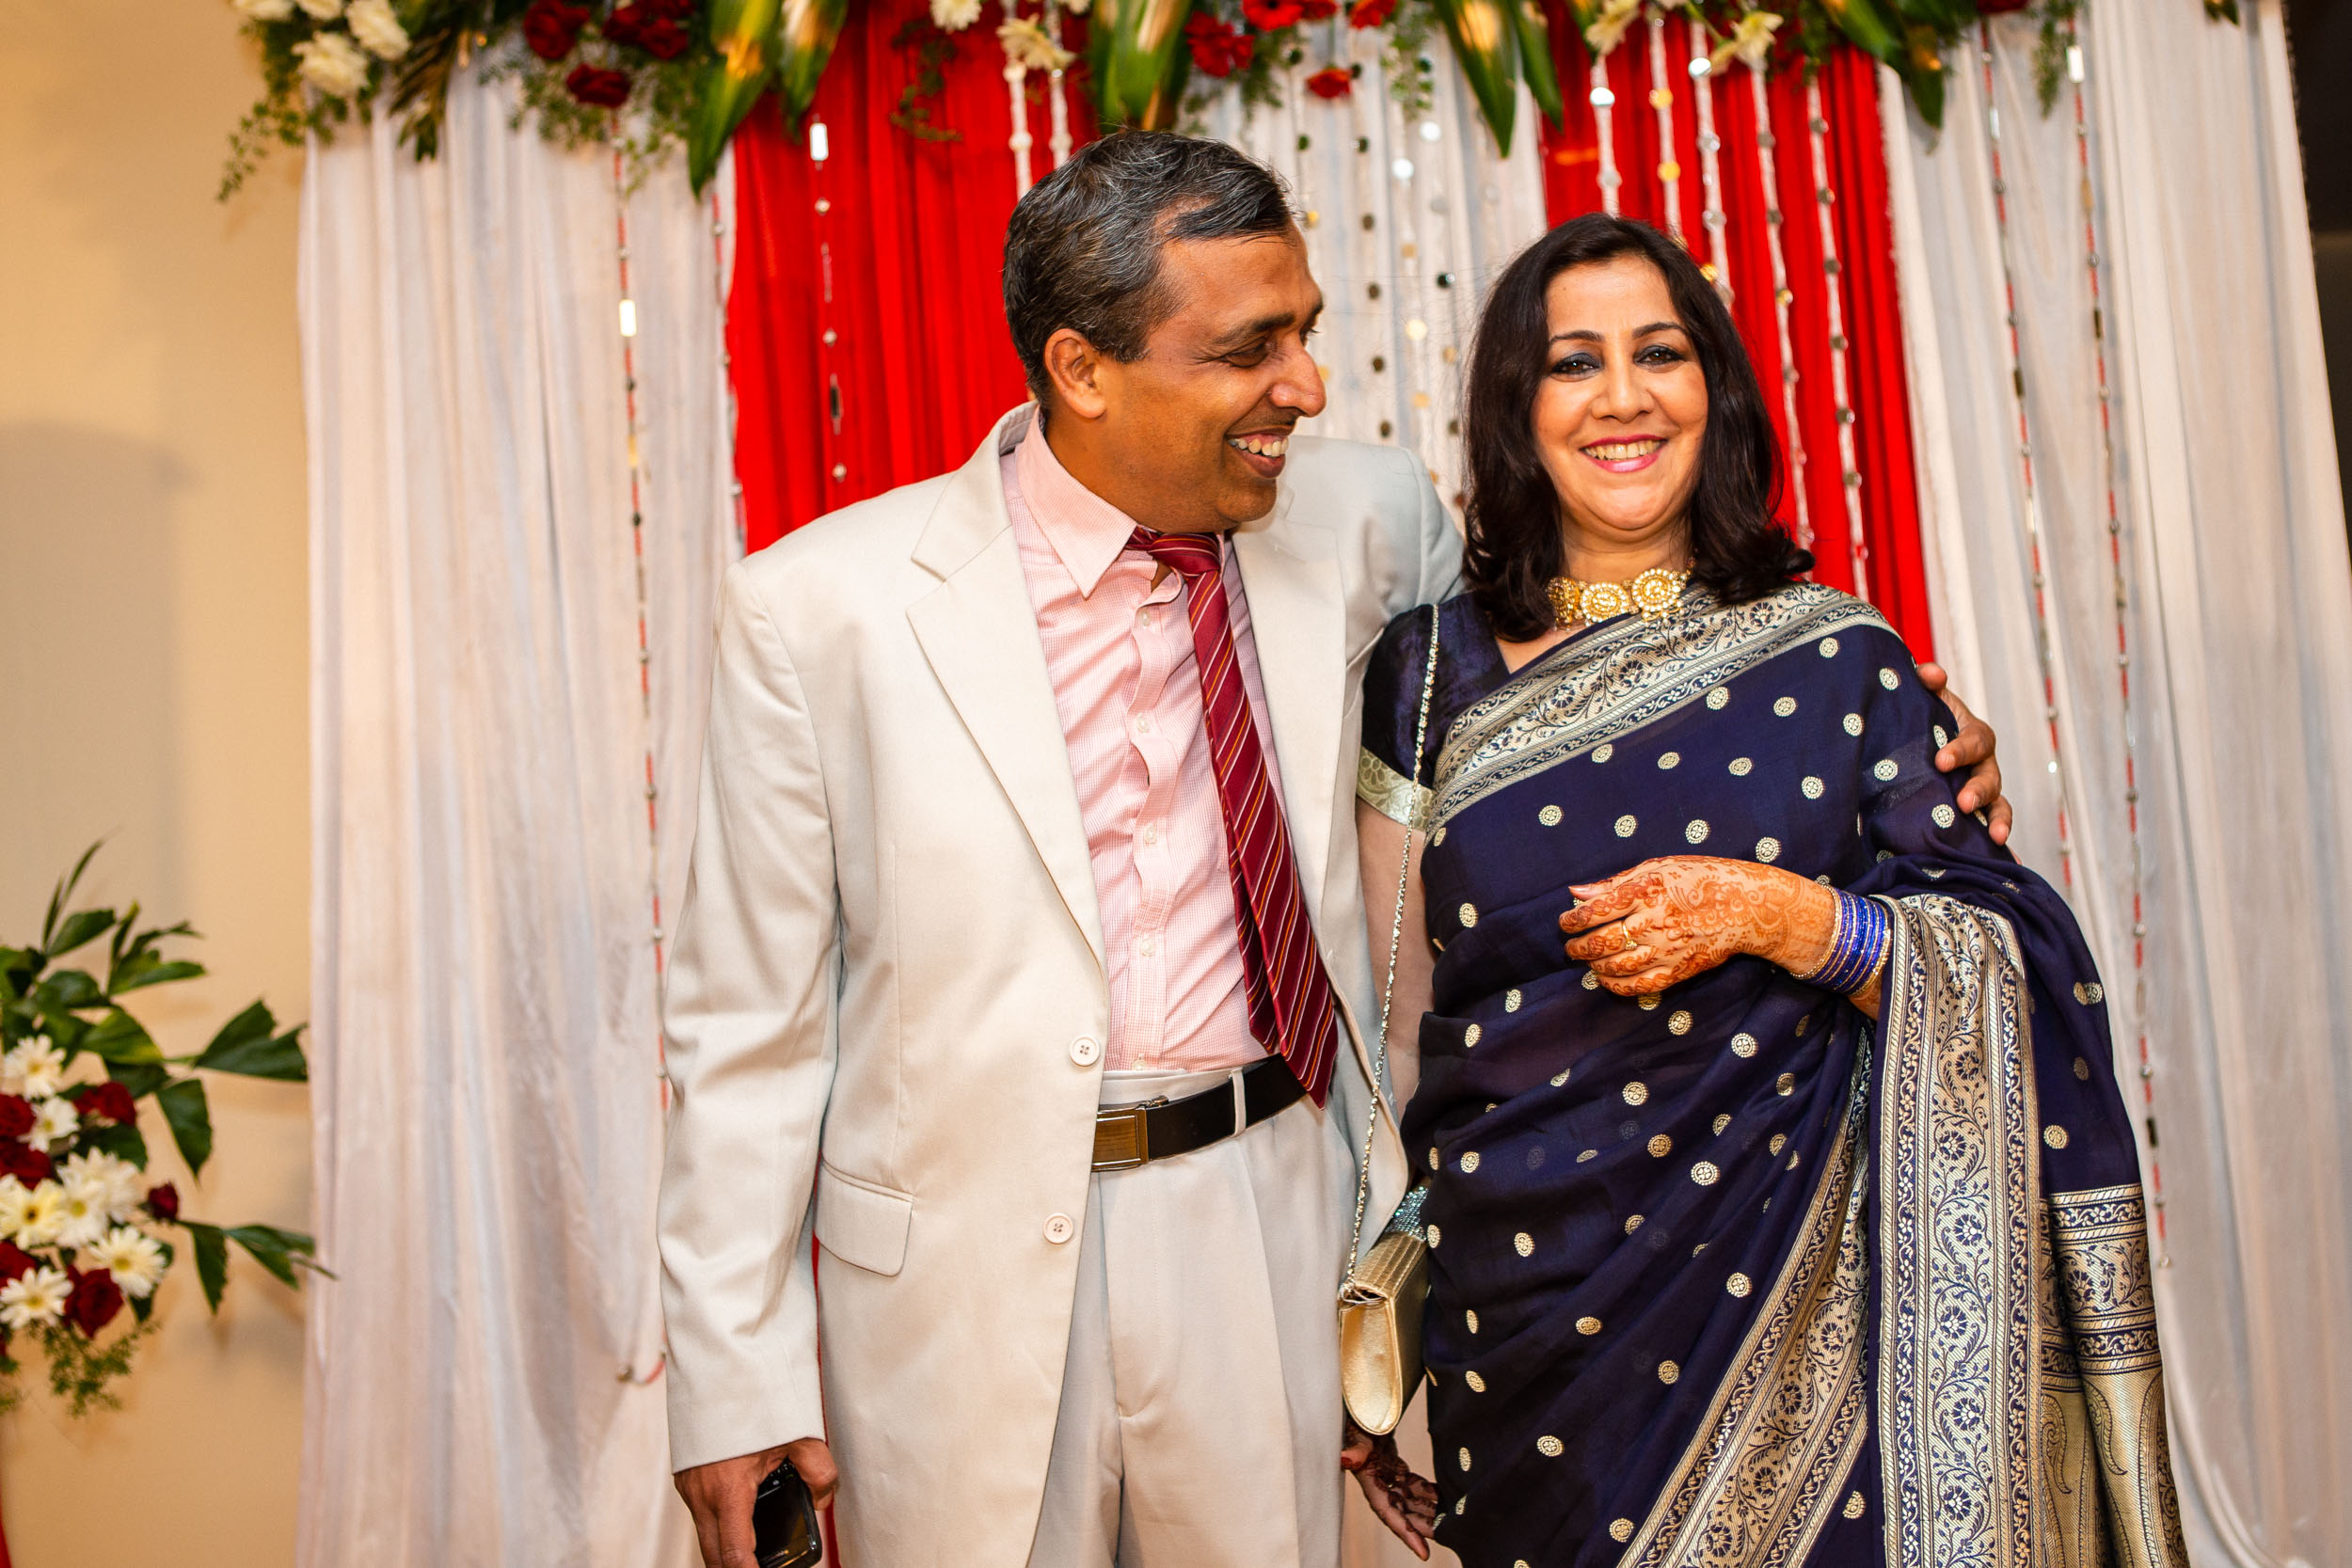 punjabi wedding at itc maynor bangalore dropdstudio